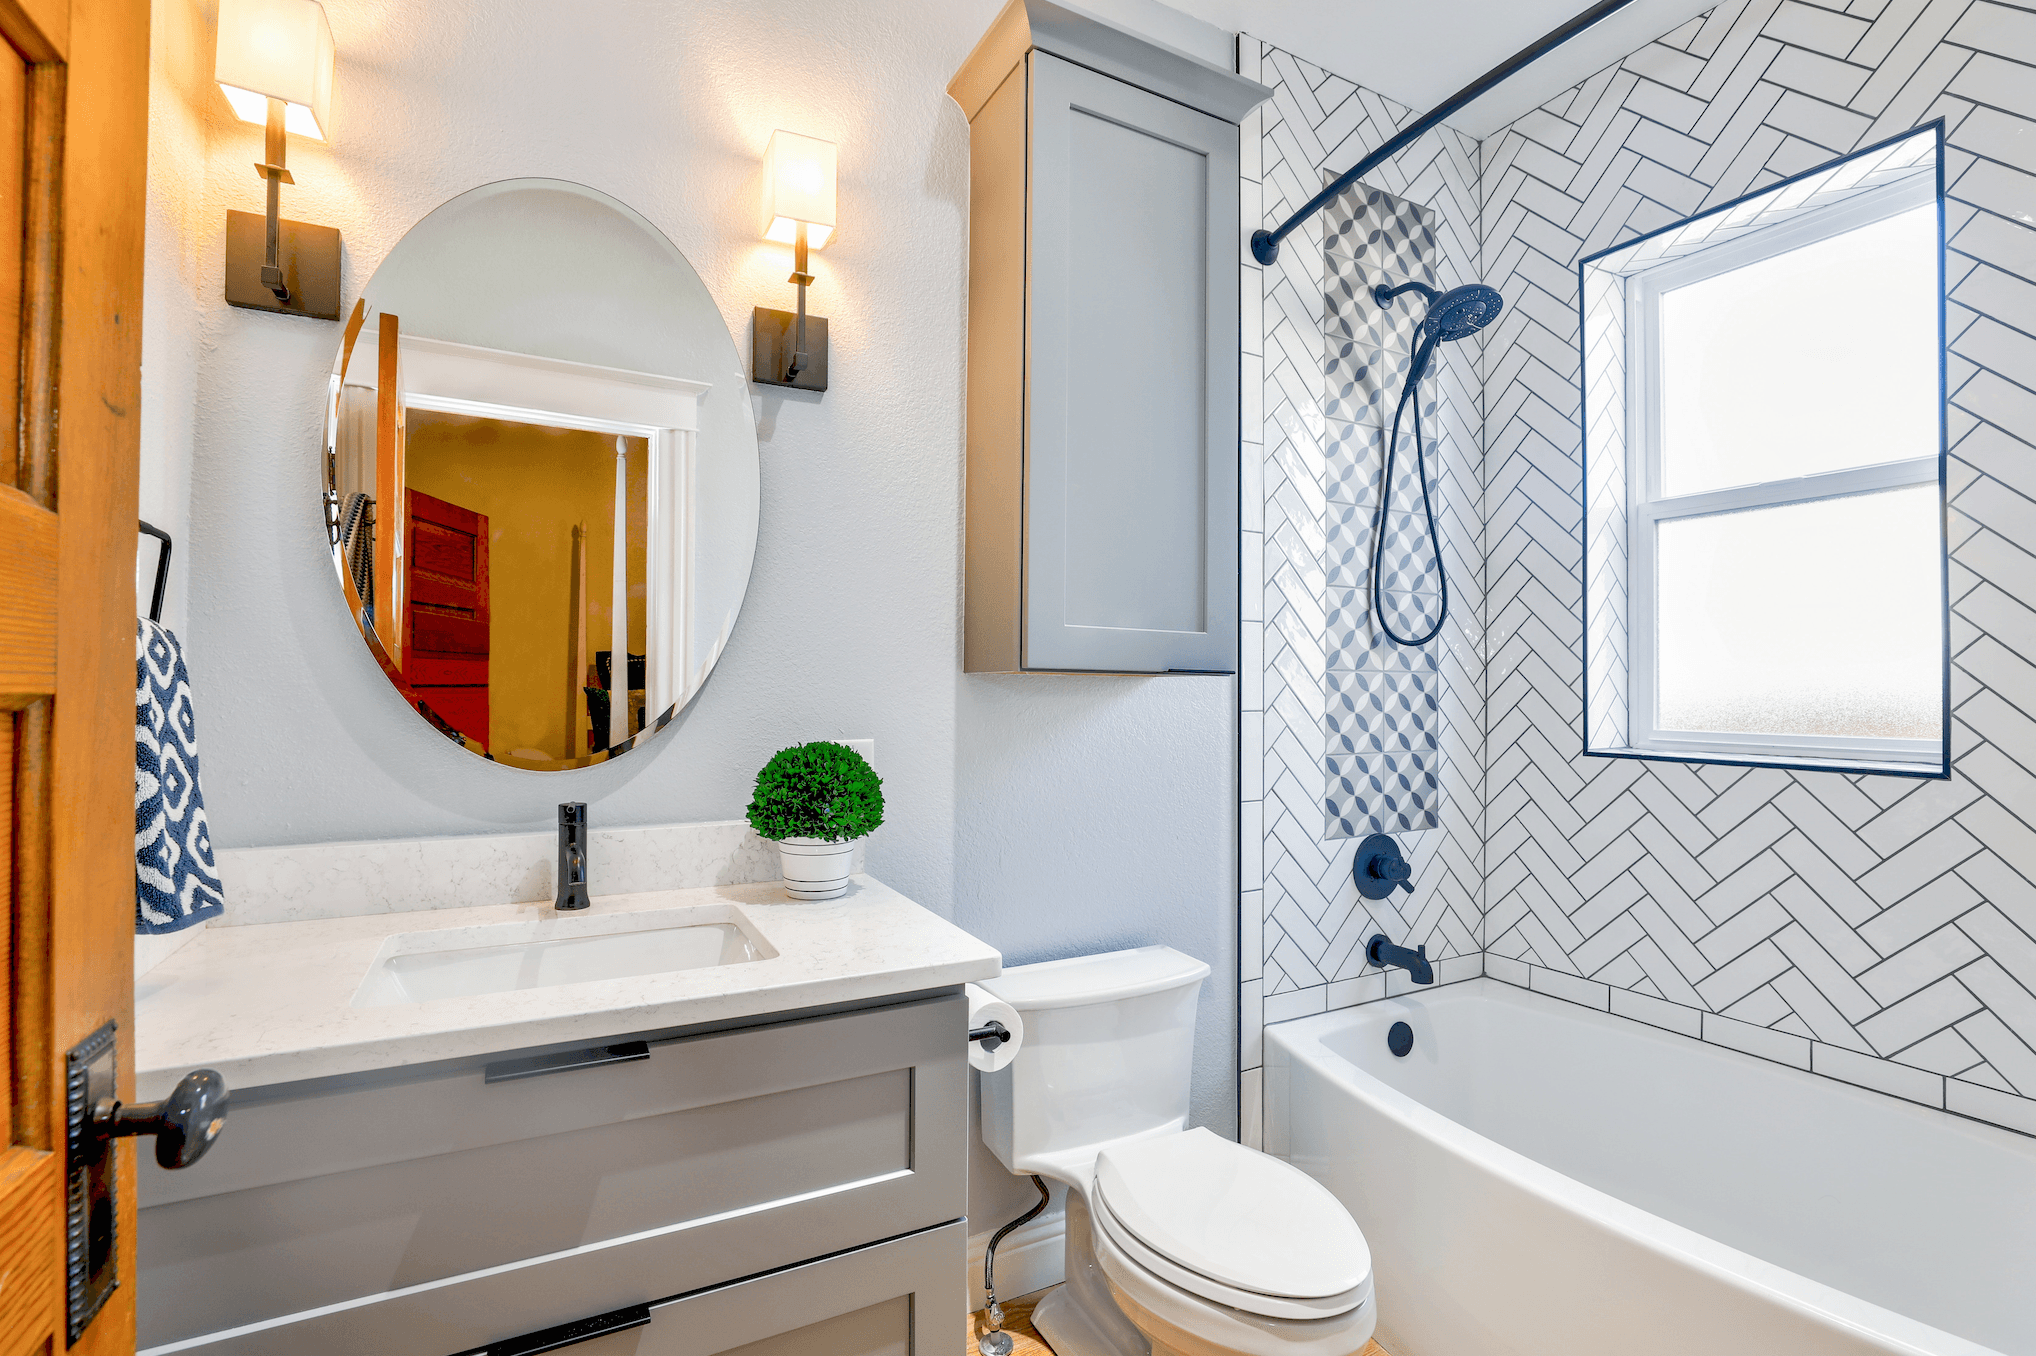 Designing A Luxury Bathroom For Small Spaces - Bathroom Design Center